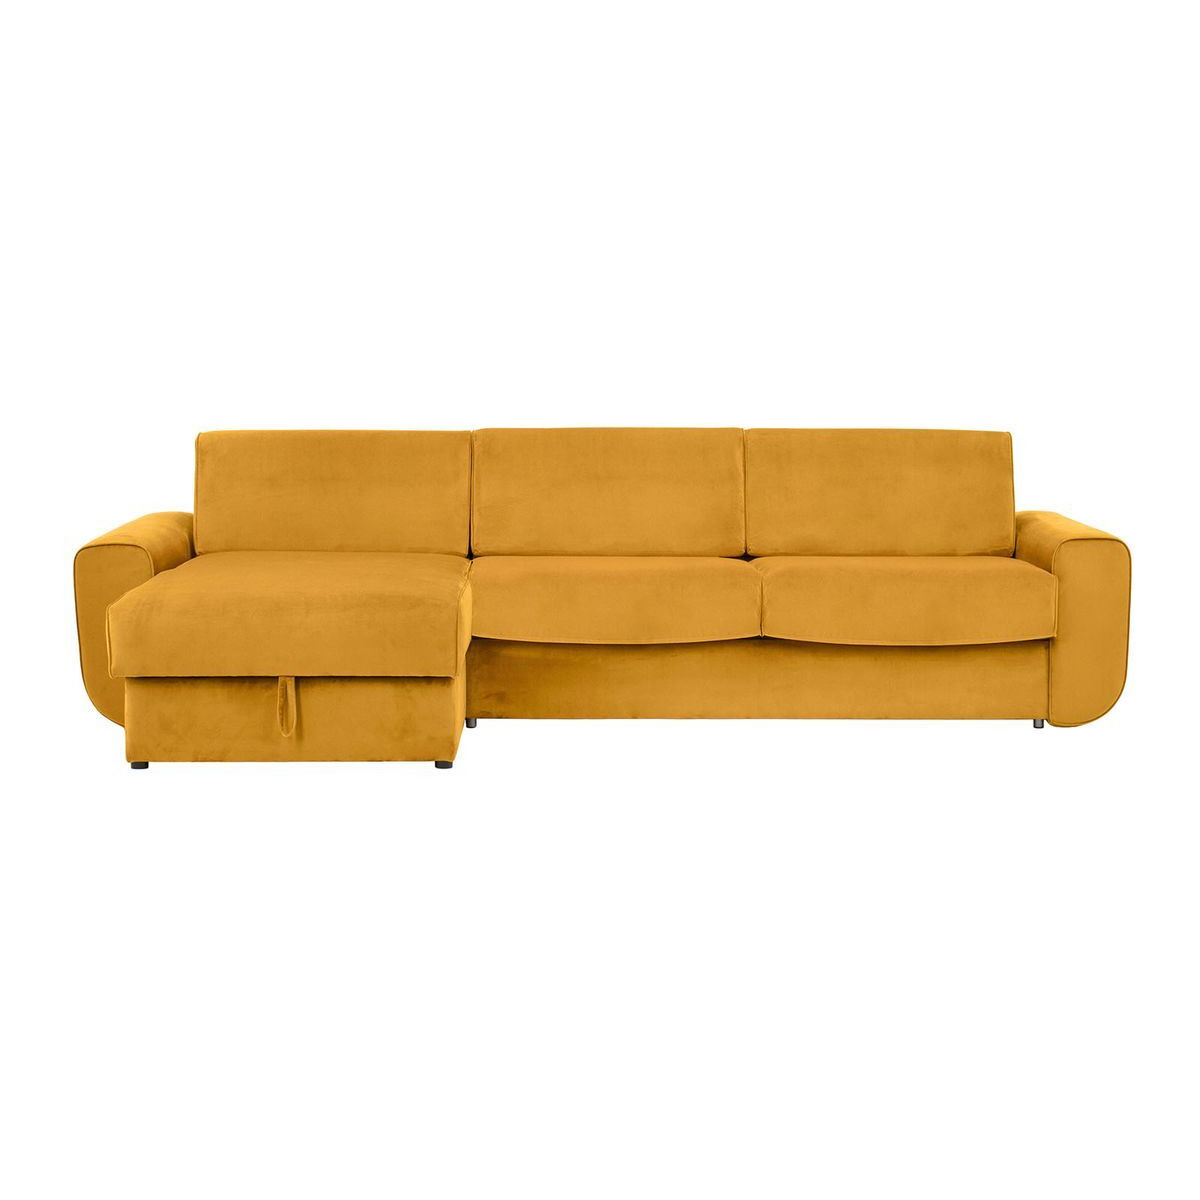 Salsa corner sofa bed with storage, mustard - image 1